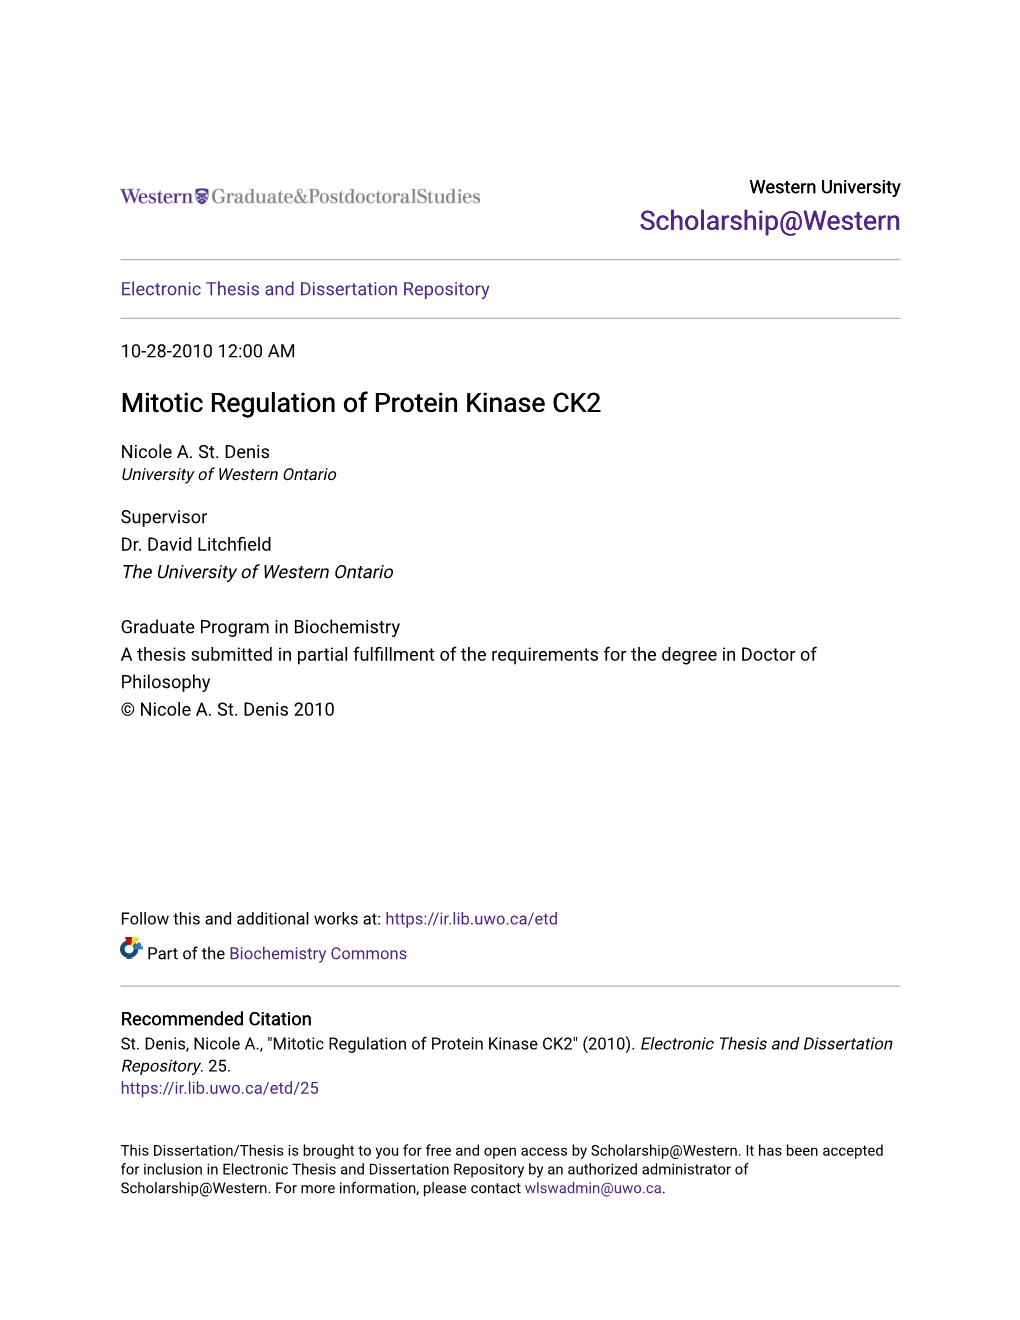 Mitotic Regulation of Protein Kinase CK2